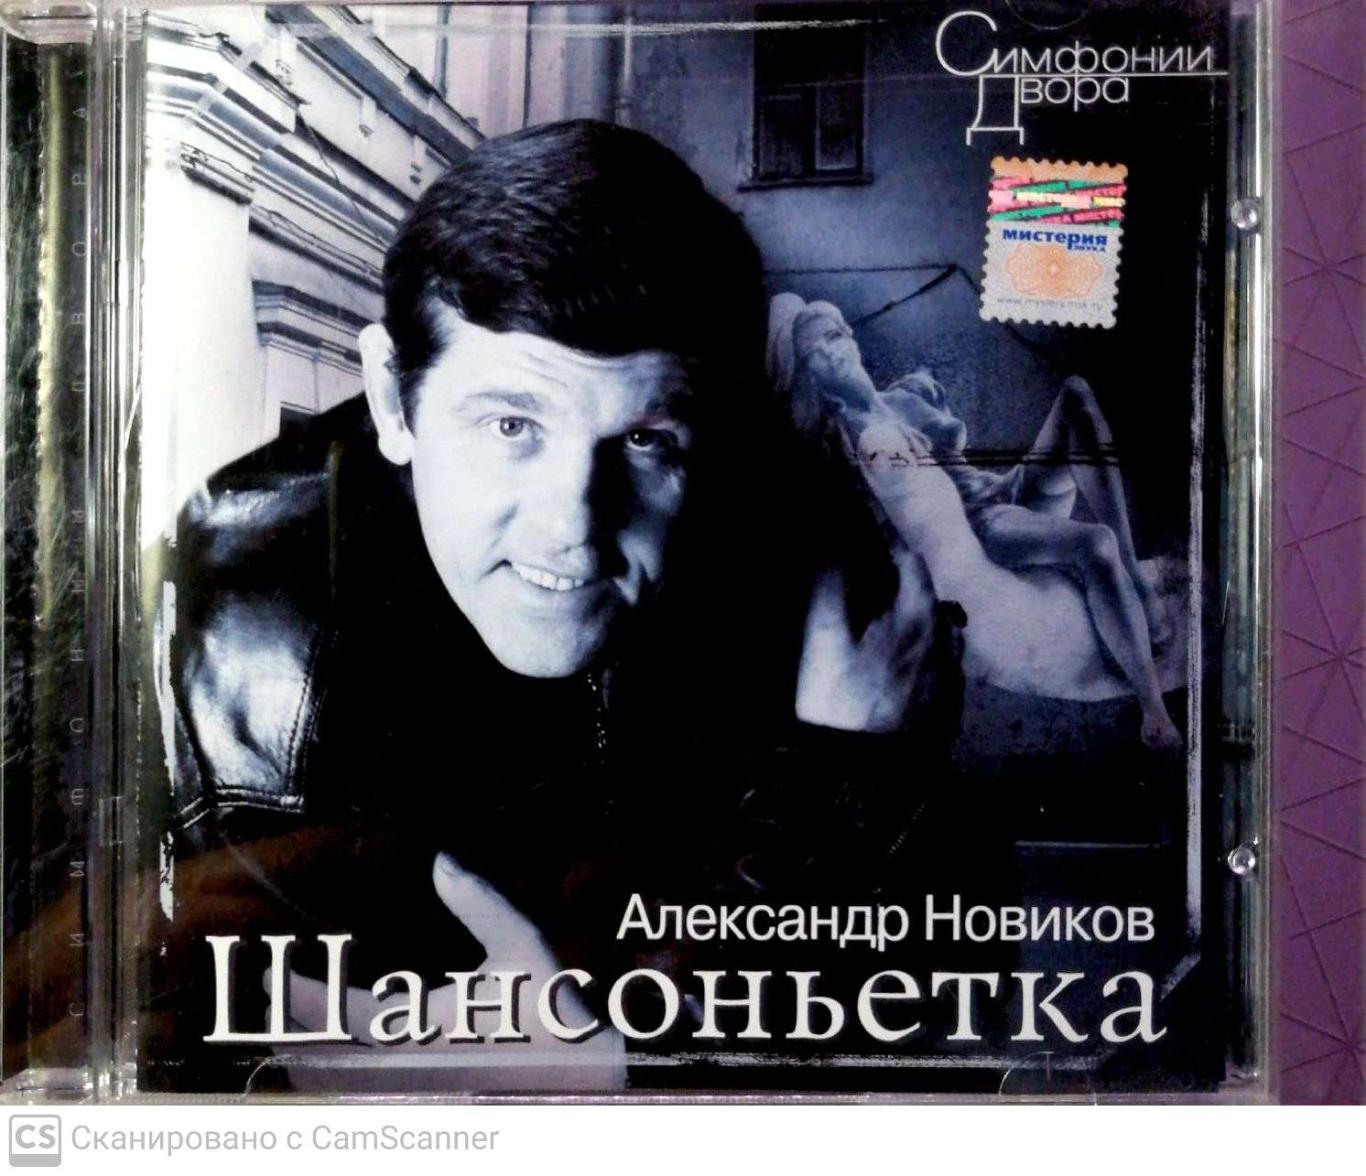 CD Александр Новиков Шансонетка 1995 (с)